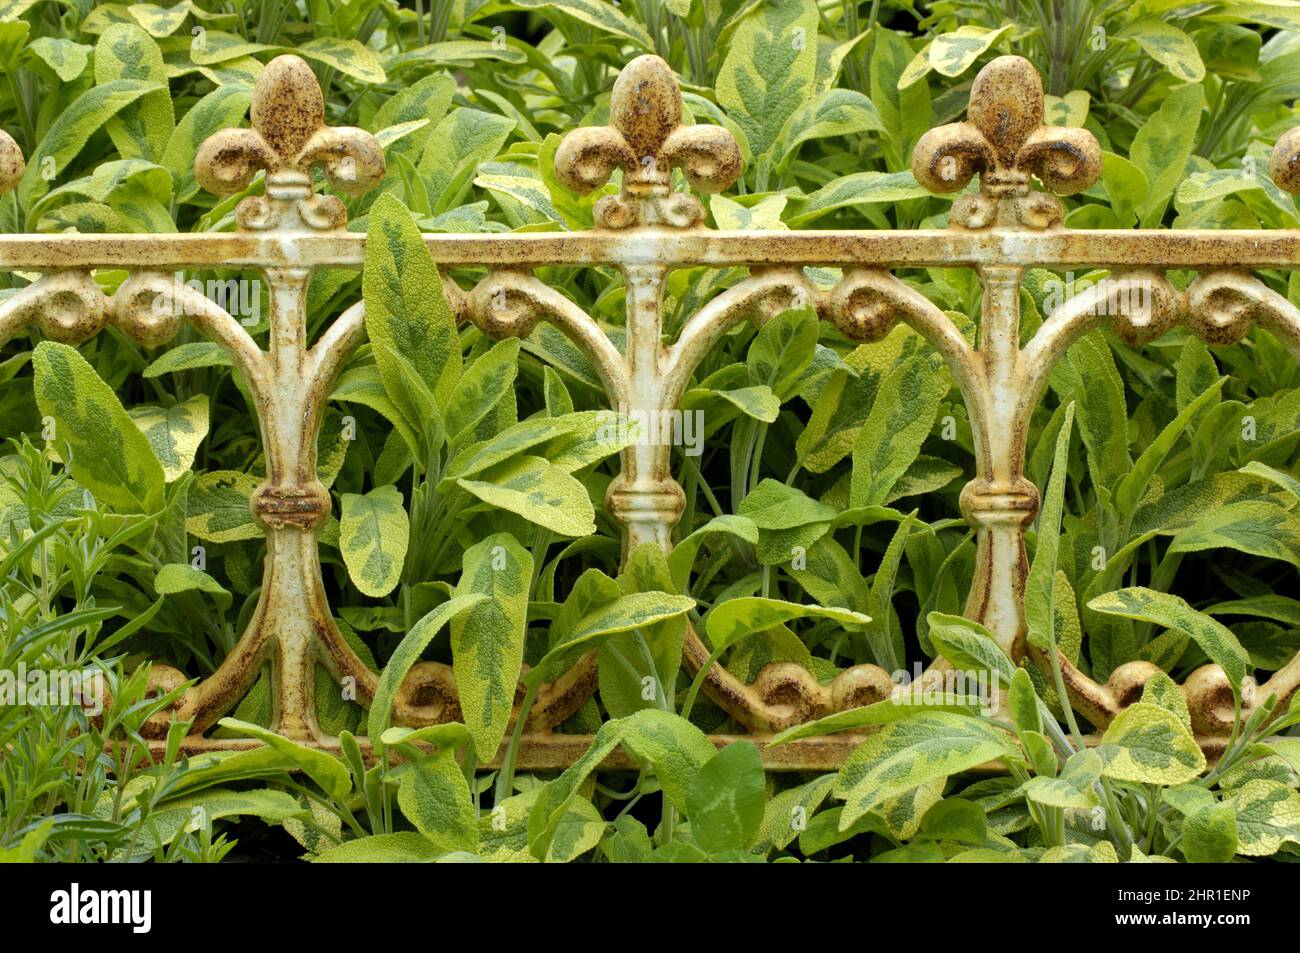 common sage, kitchen sage (Salvia officinalis 'Icterina', Salvia officinalis Icterina), cultivar Icterina at a garden fence Stock Photo